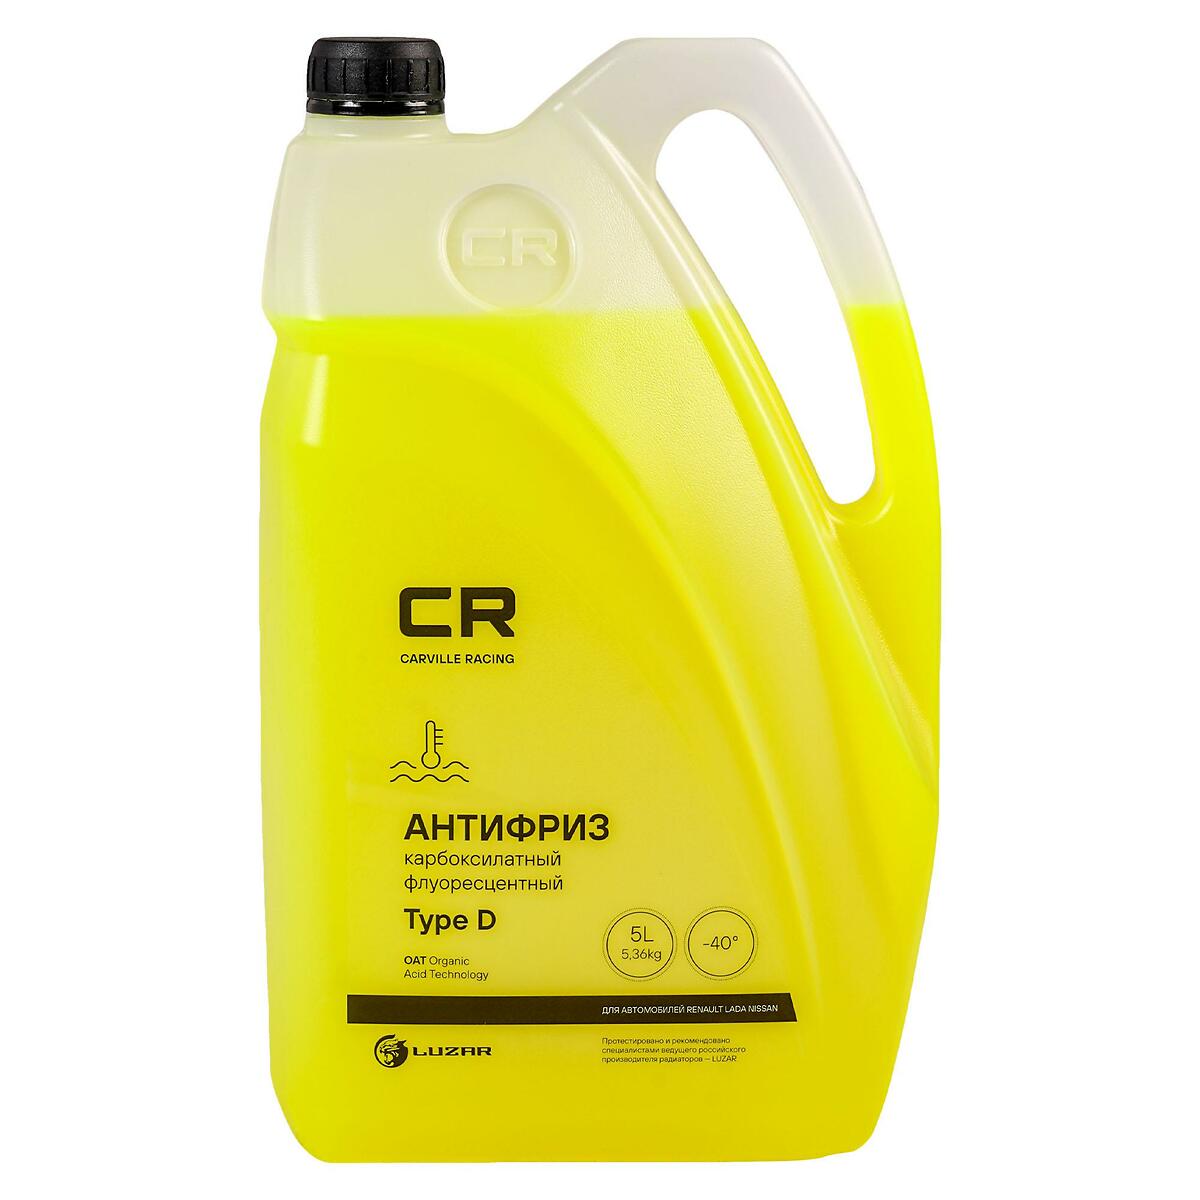 Антифриз CR для а/м Renault (Лада, Nissan), Type D, флуор. -40°С, желтый, готовый, 5л/5.37кг